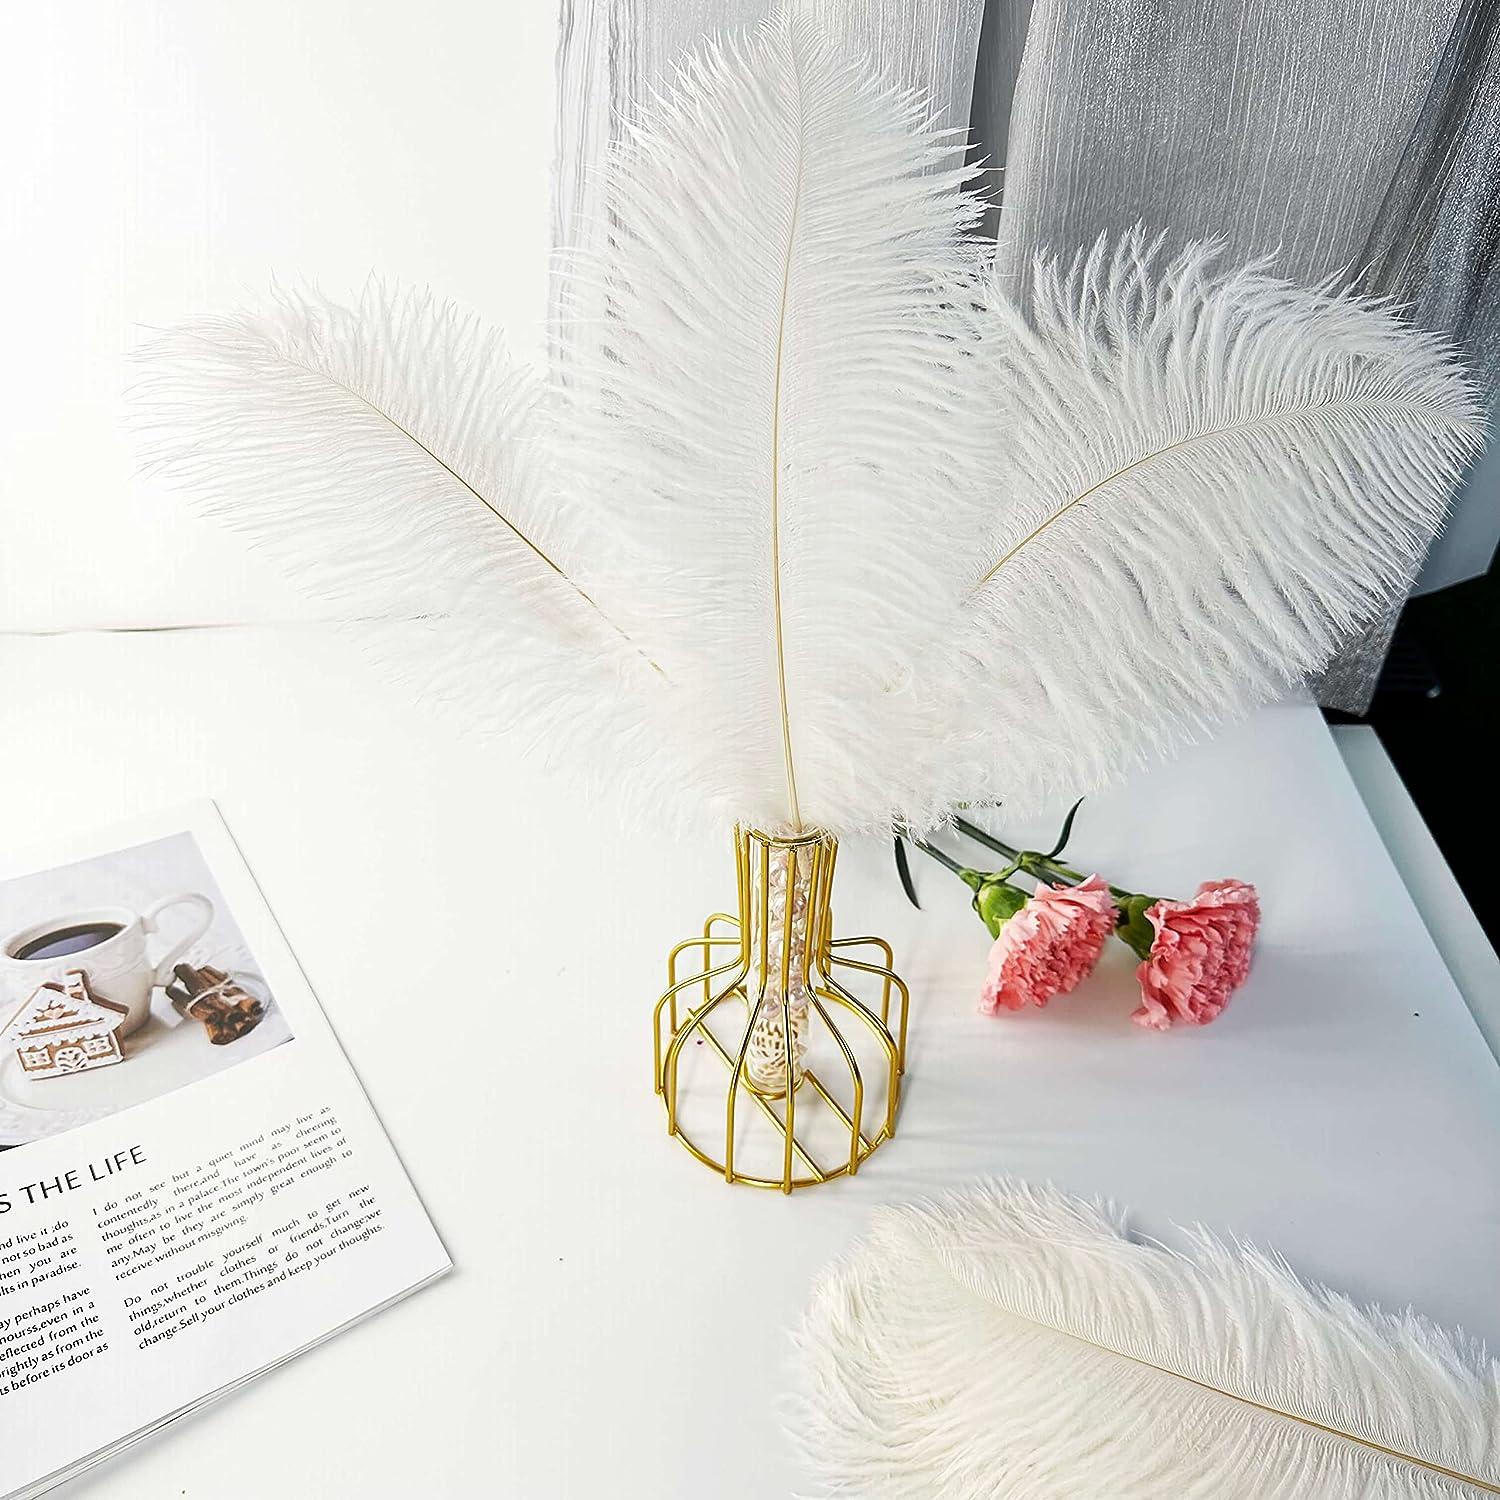 25 Best Ostrich Feather Centerpieces ideas  feather centerpieces,  centerpieces, ostrich feather centerpieces